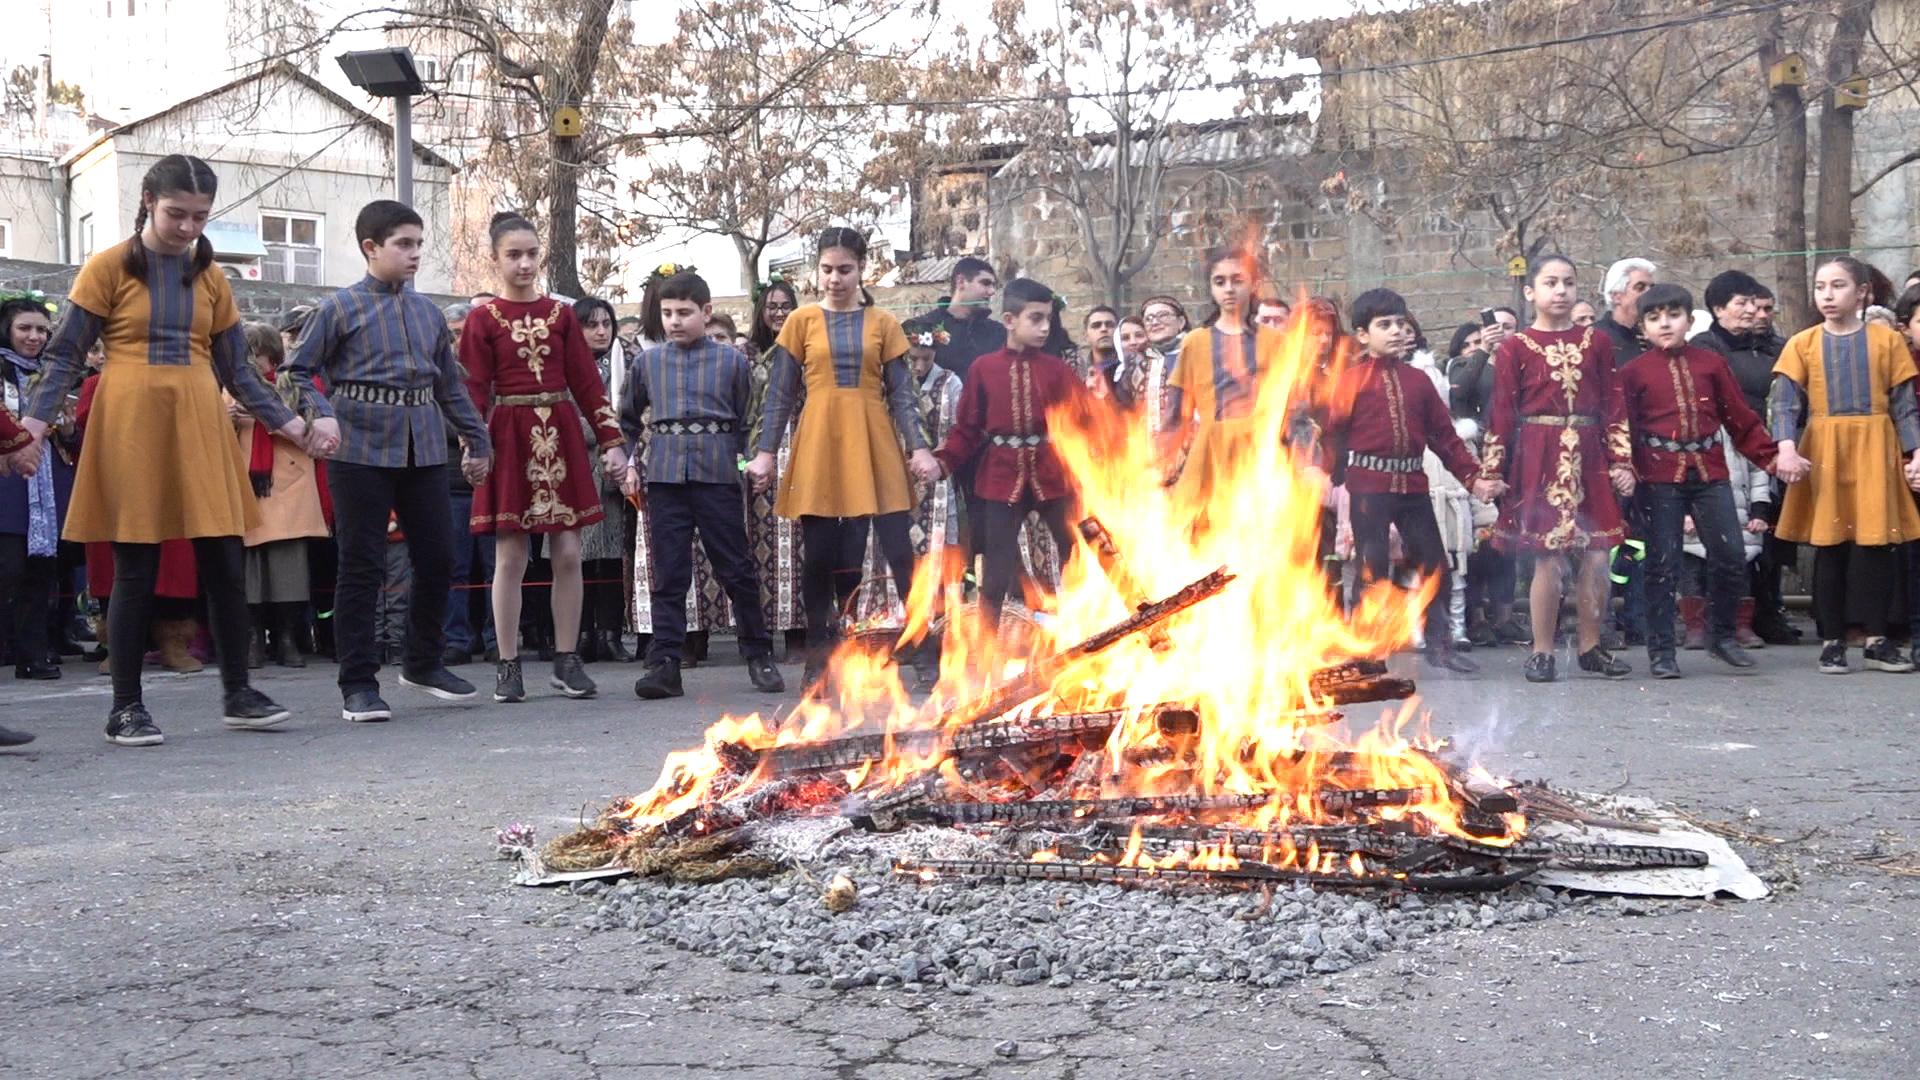 Trndez: Armenians Celebrate Purification